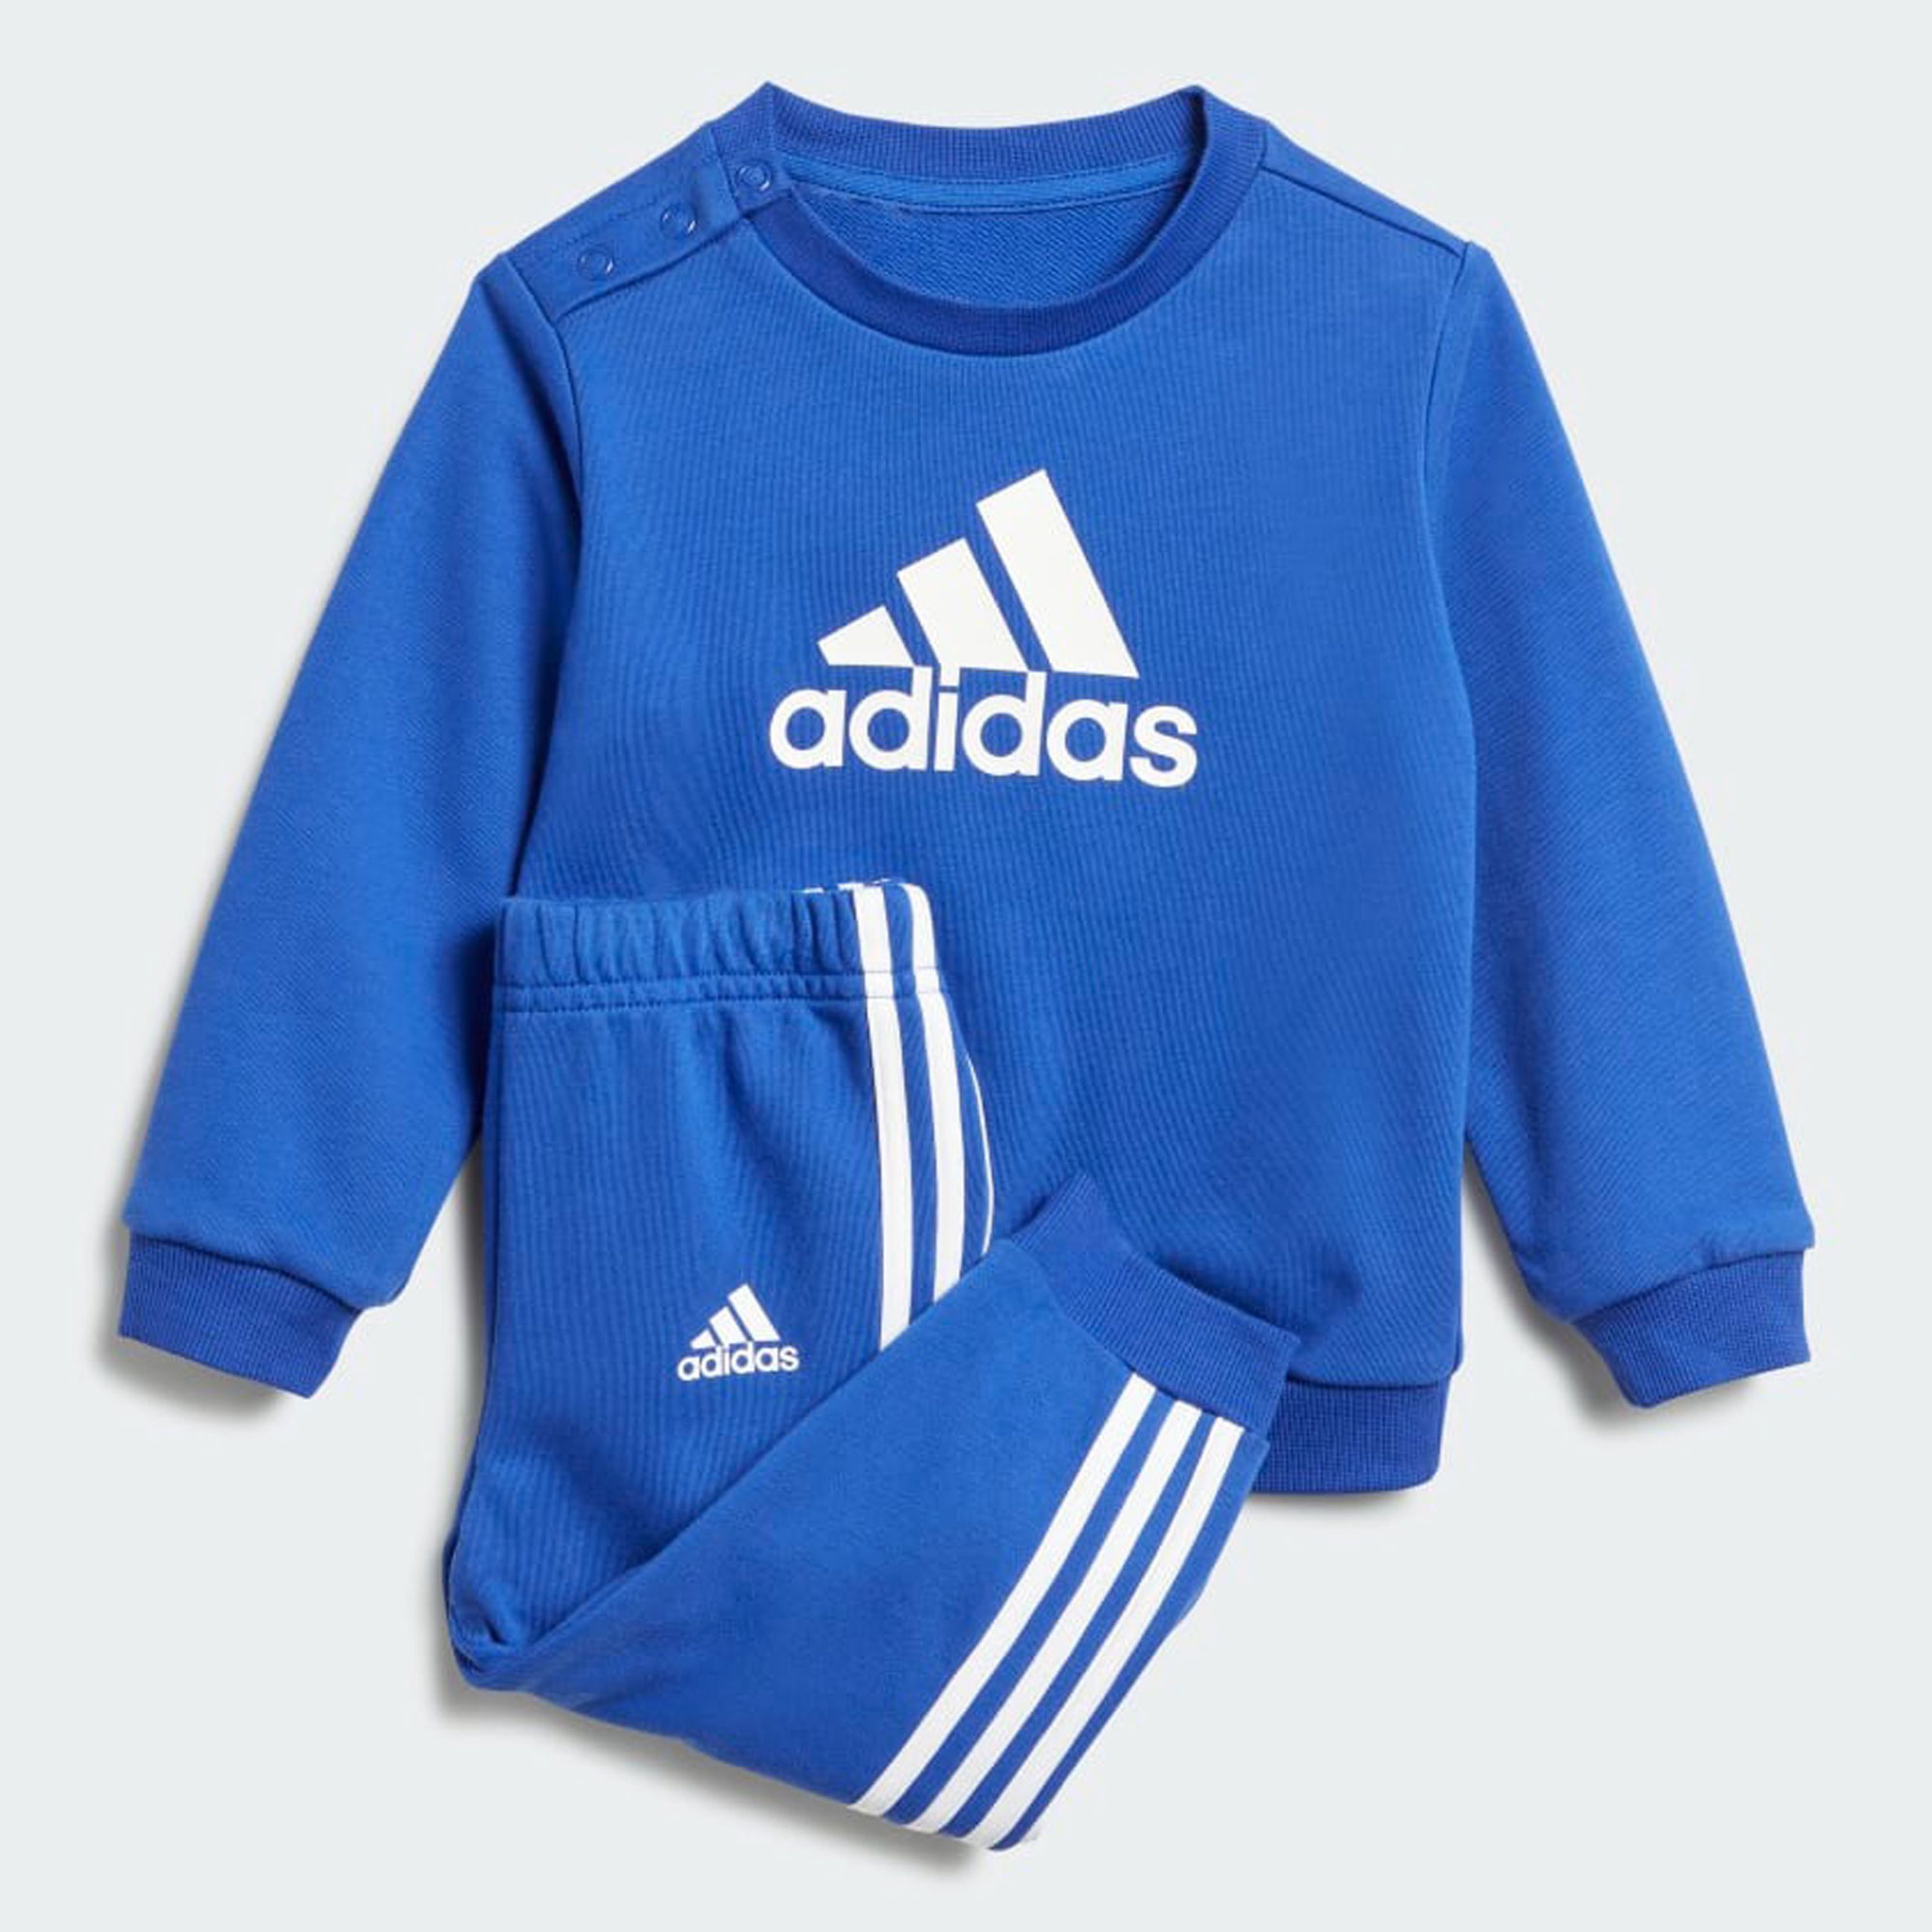 Adidas Sportswear joggingpak kobaltblauw wit Trainingspak Katoen Ronde hals 104